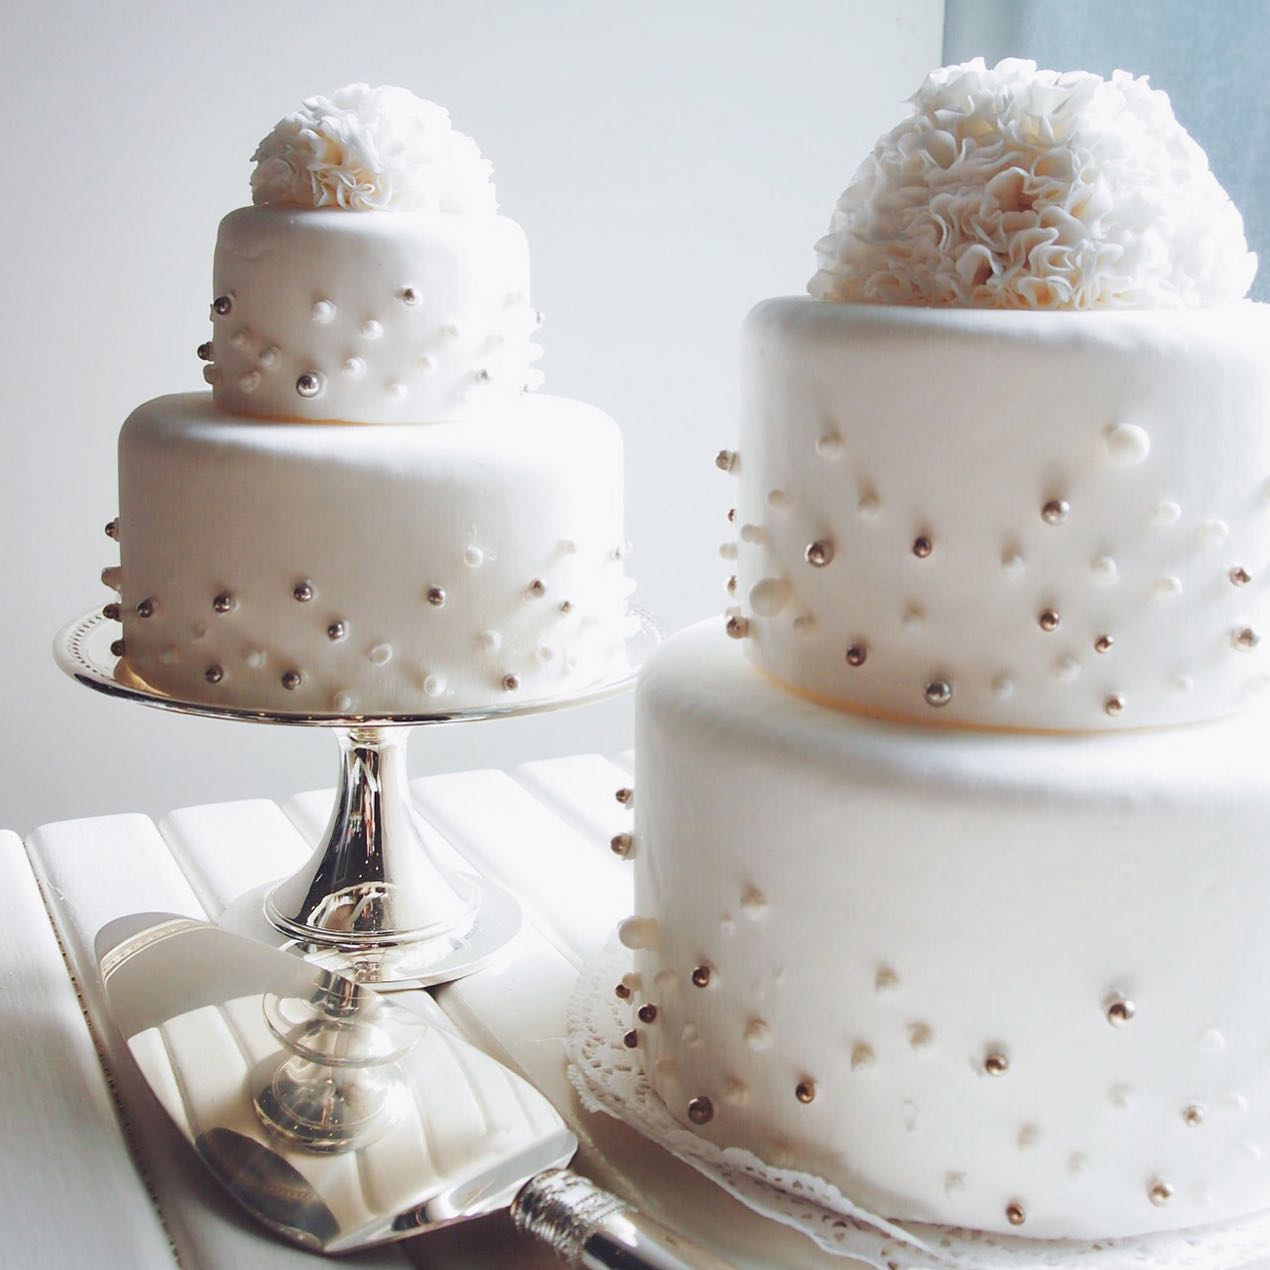 nsw sydney wedding cake designer cakes weddings